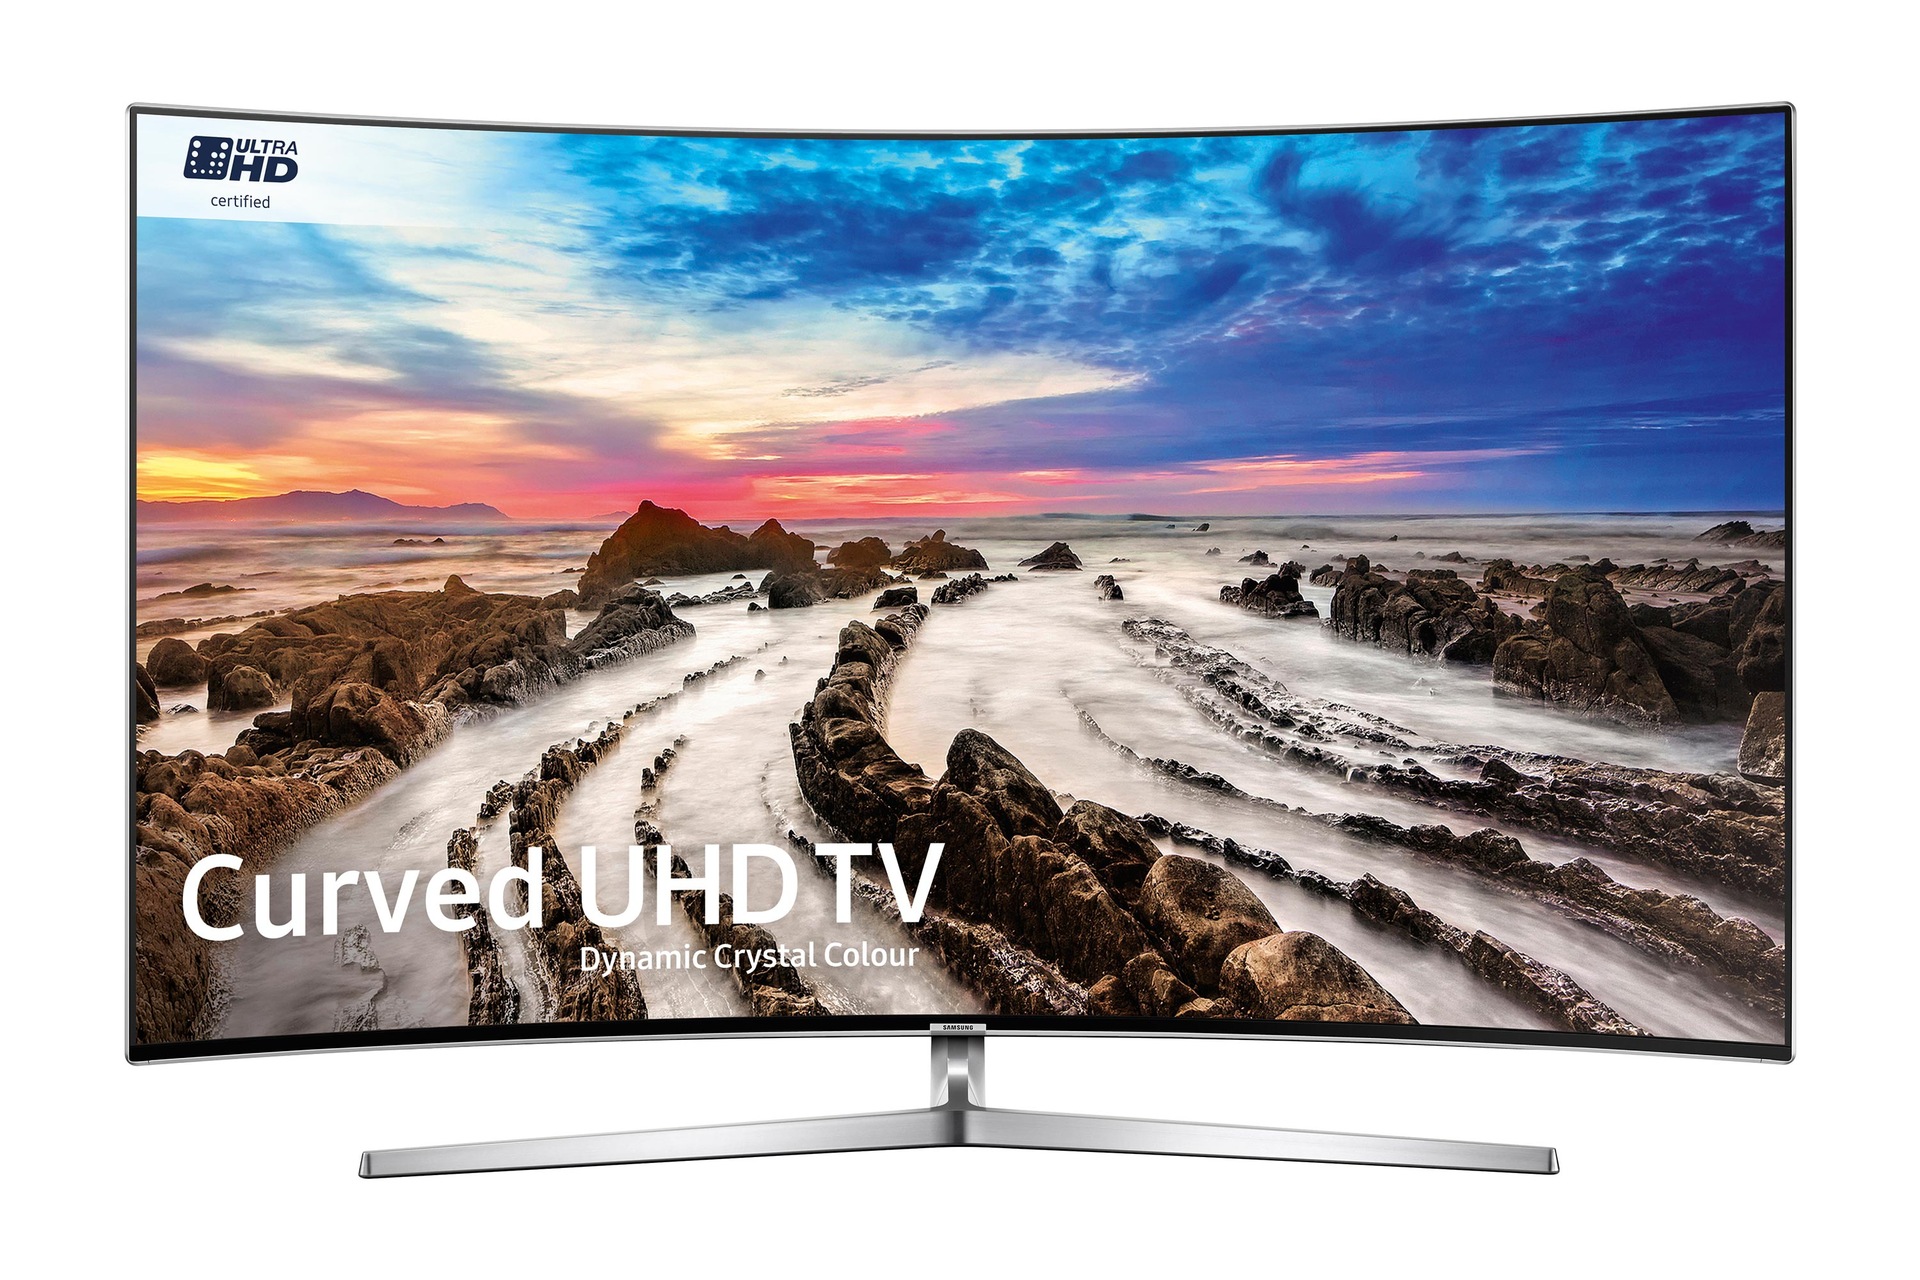 Samsung UHD TV MU9000 - Best 65 inch Smart TV to buy | Samsung UK